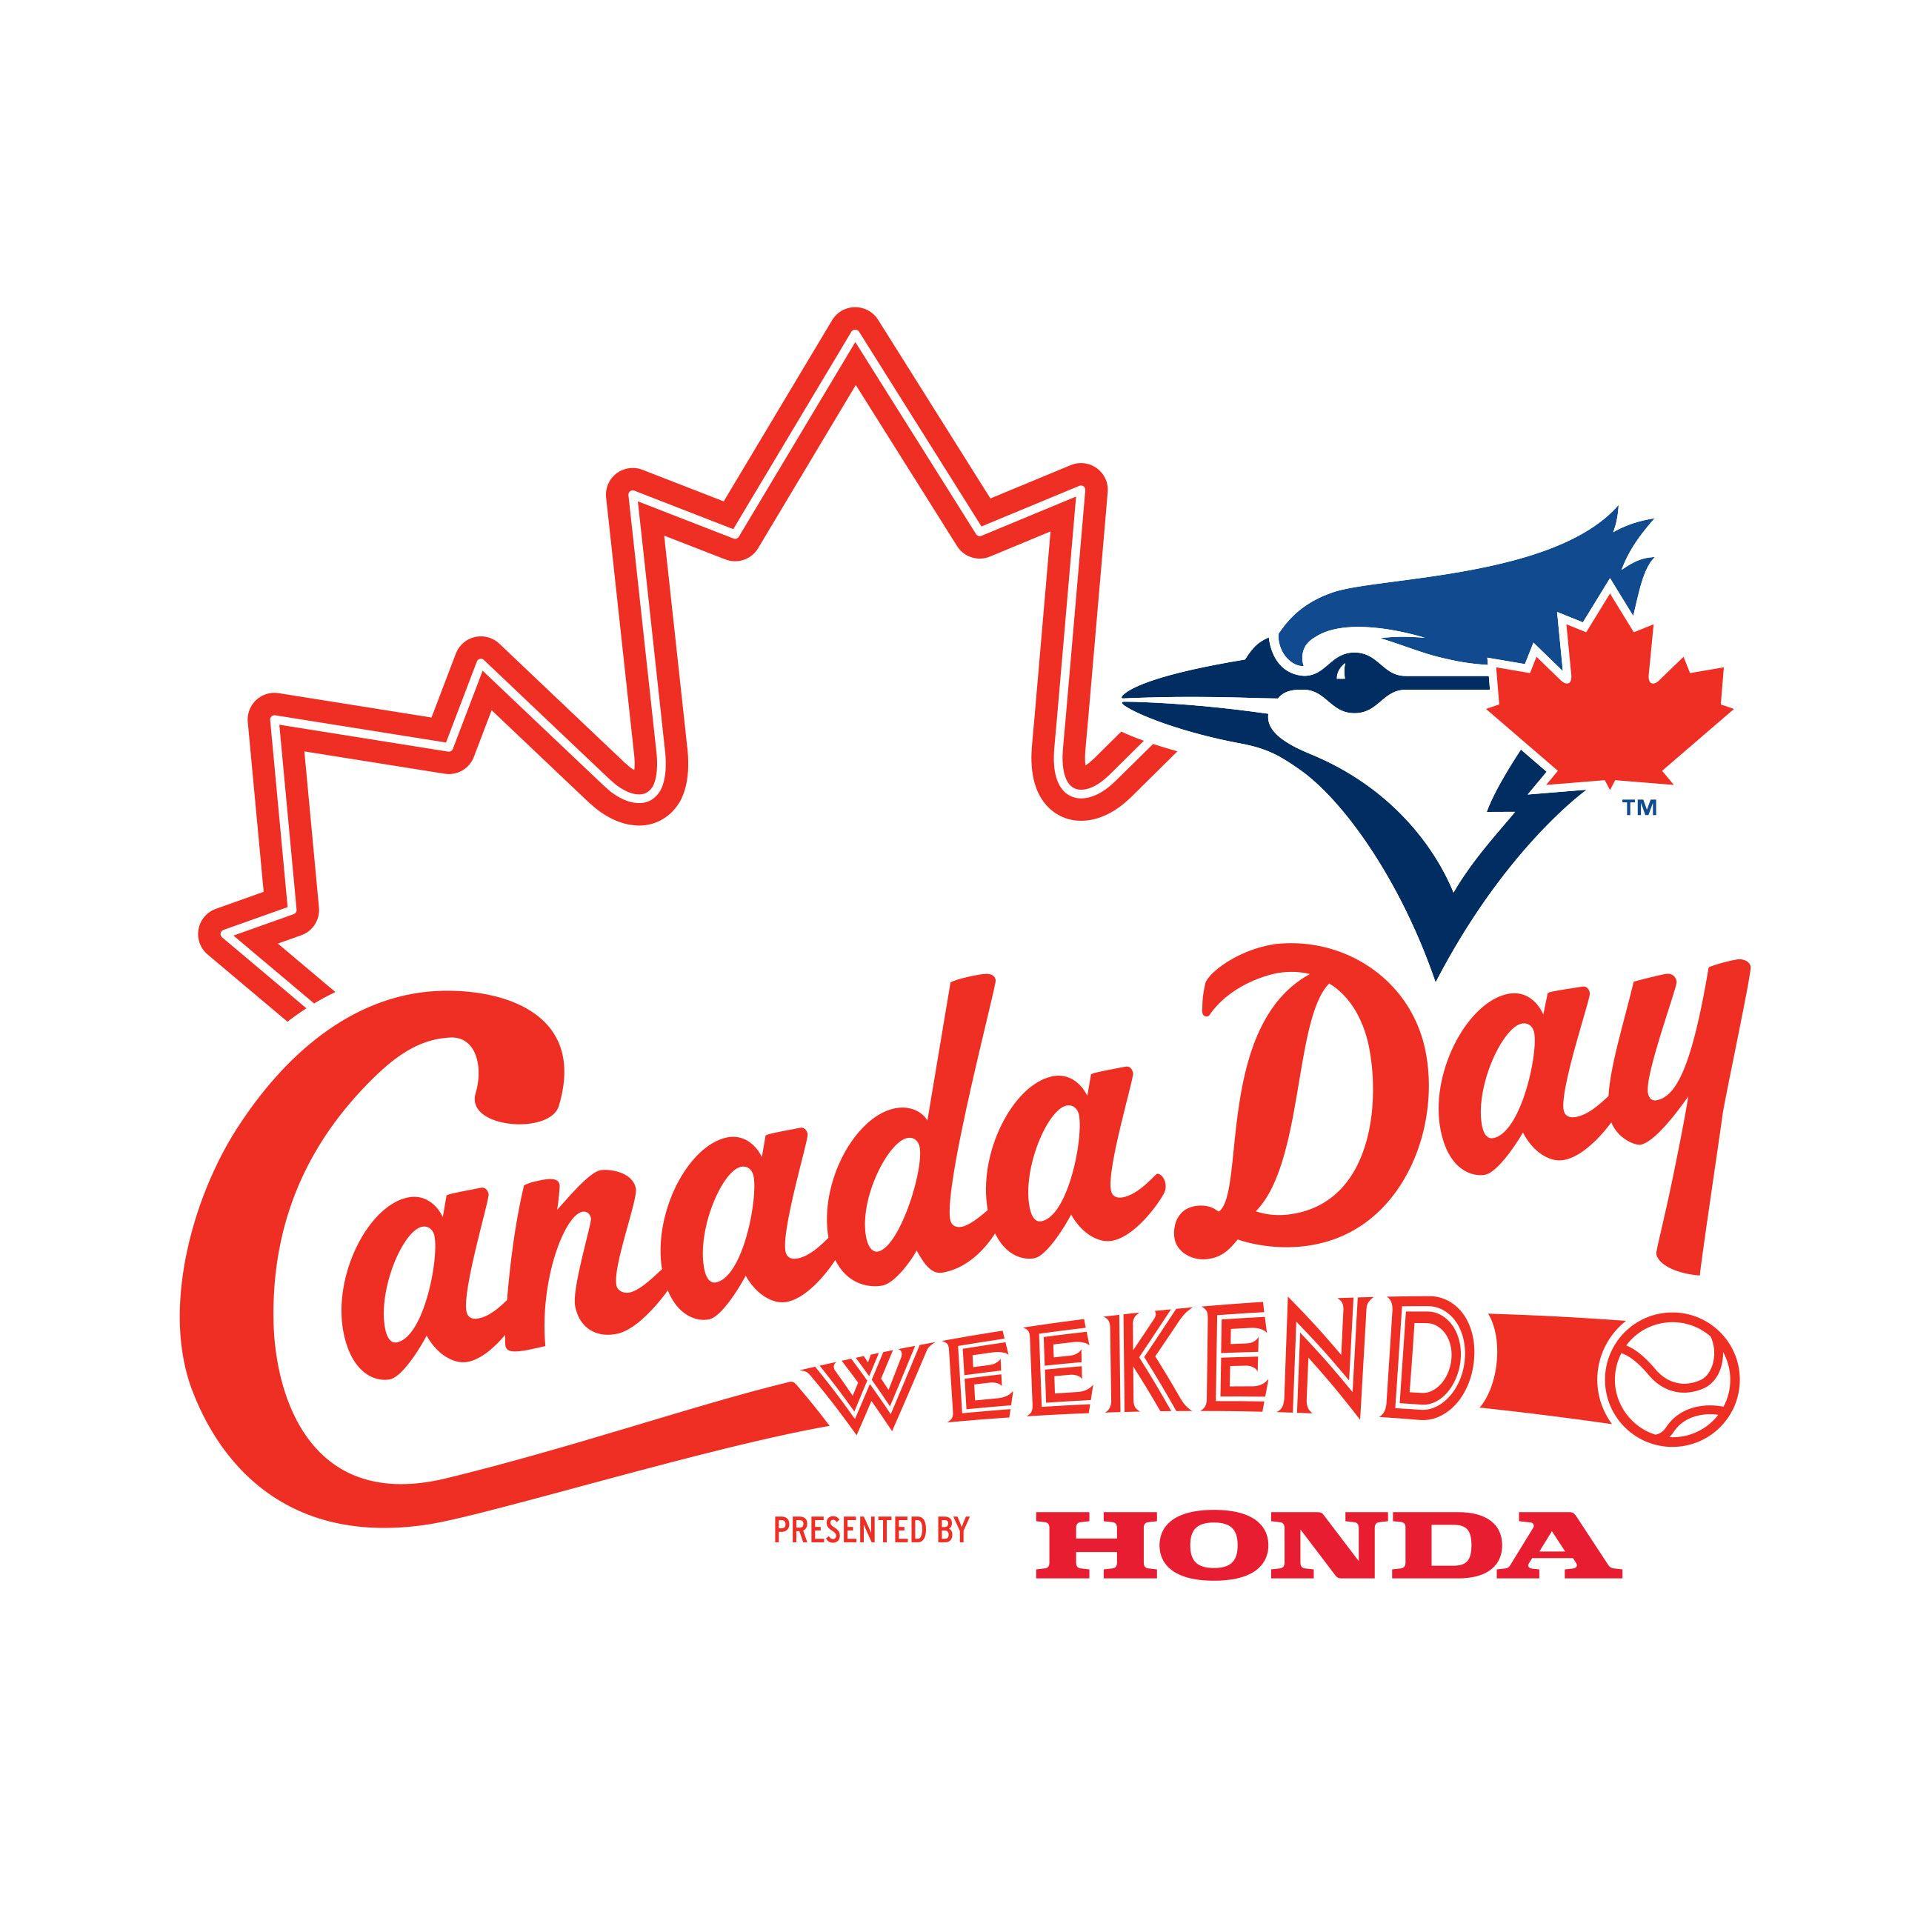 Canada Day Weekend presented by Honda. Toronto Blue Jays